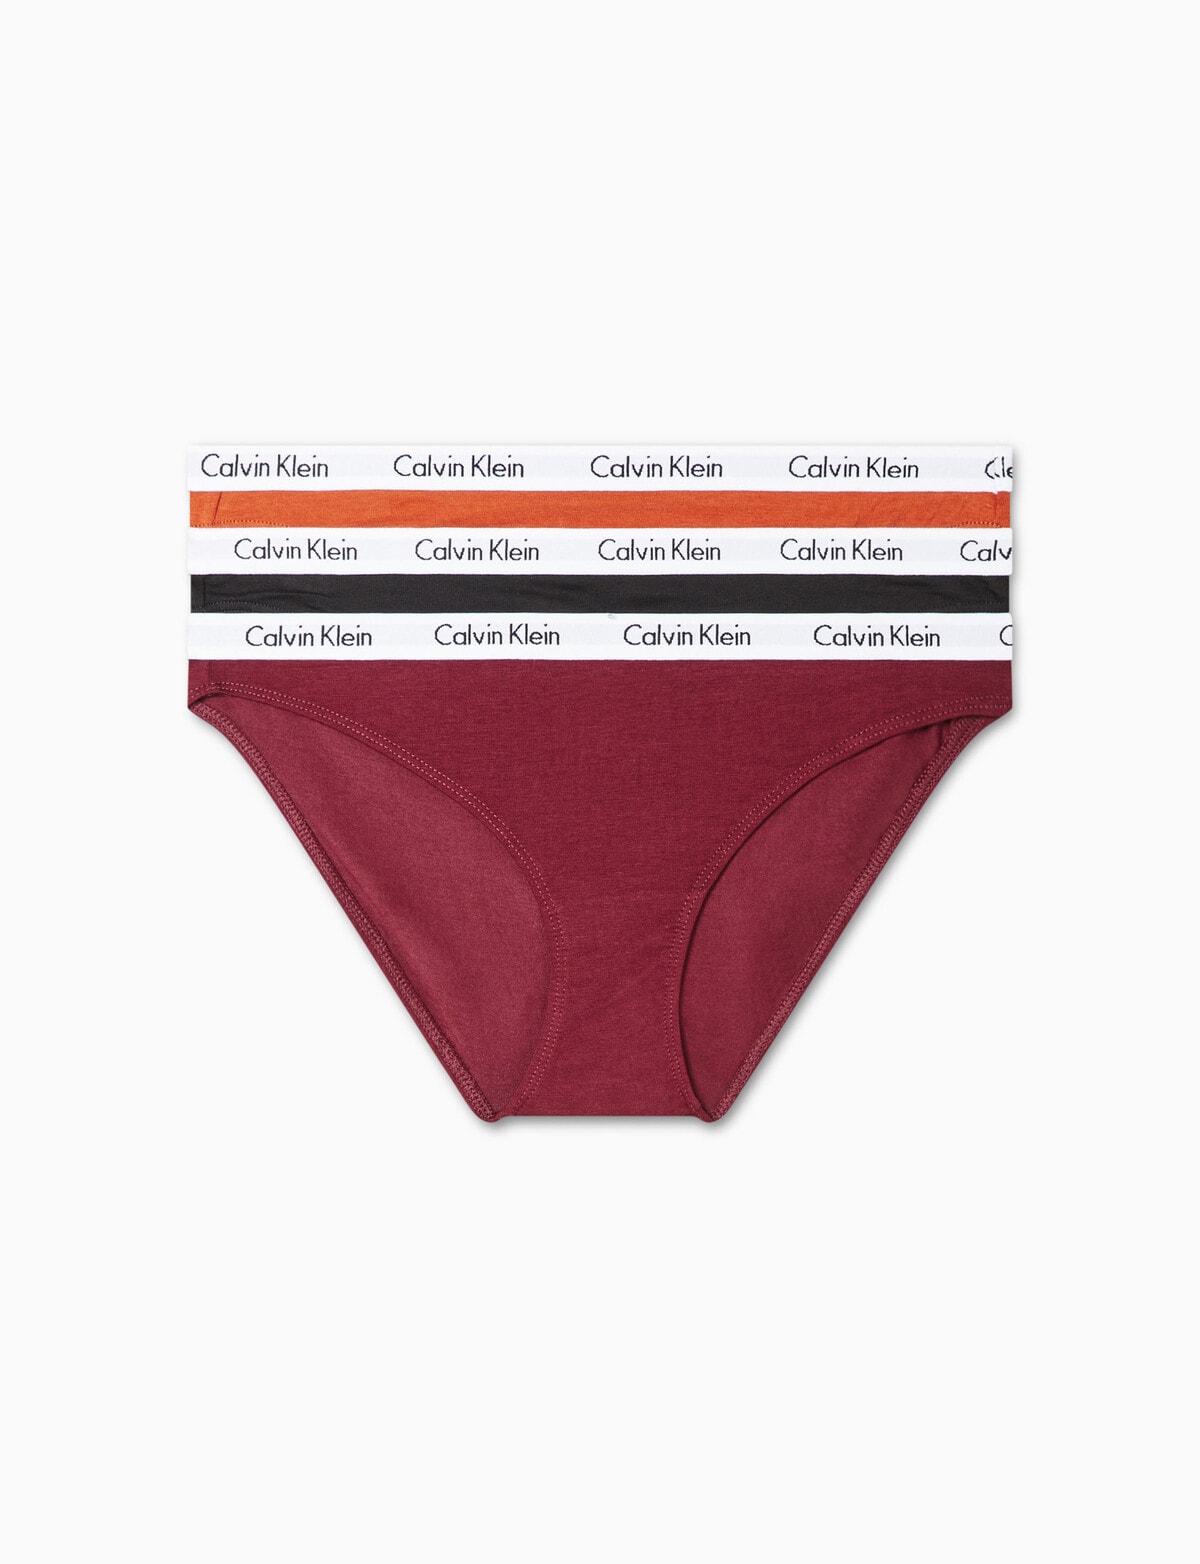 Calvin Klein Carousel Bikini, 3-Pack, Gingerbread, Black & Tawny